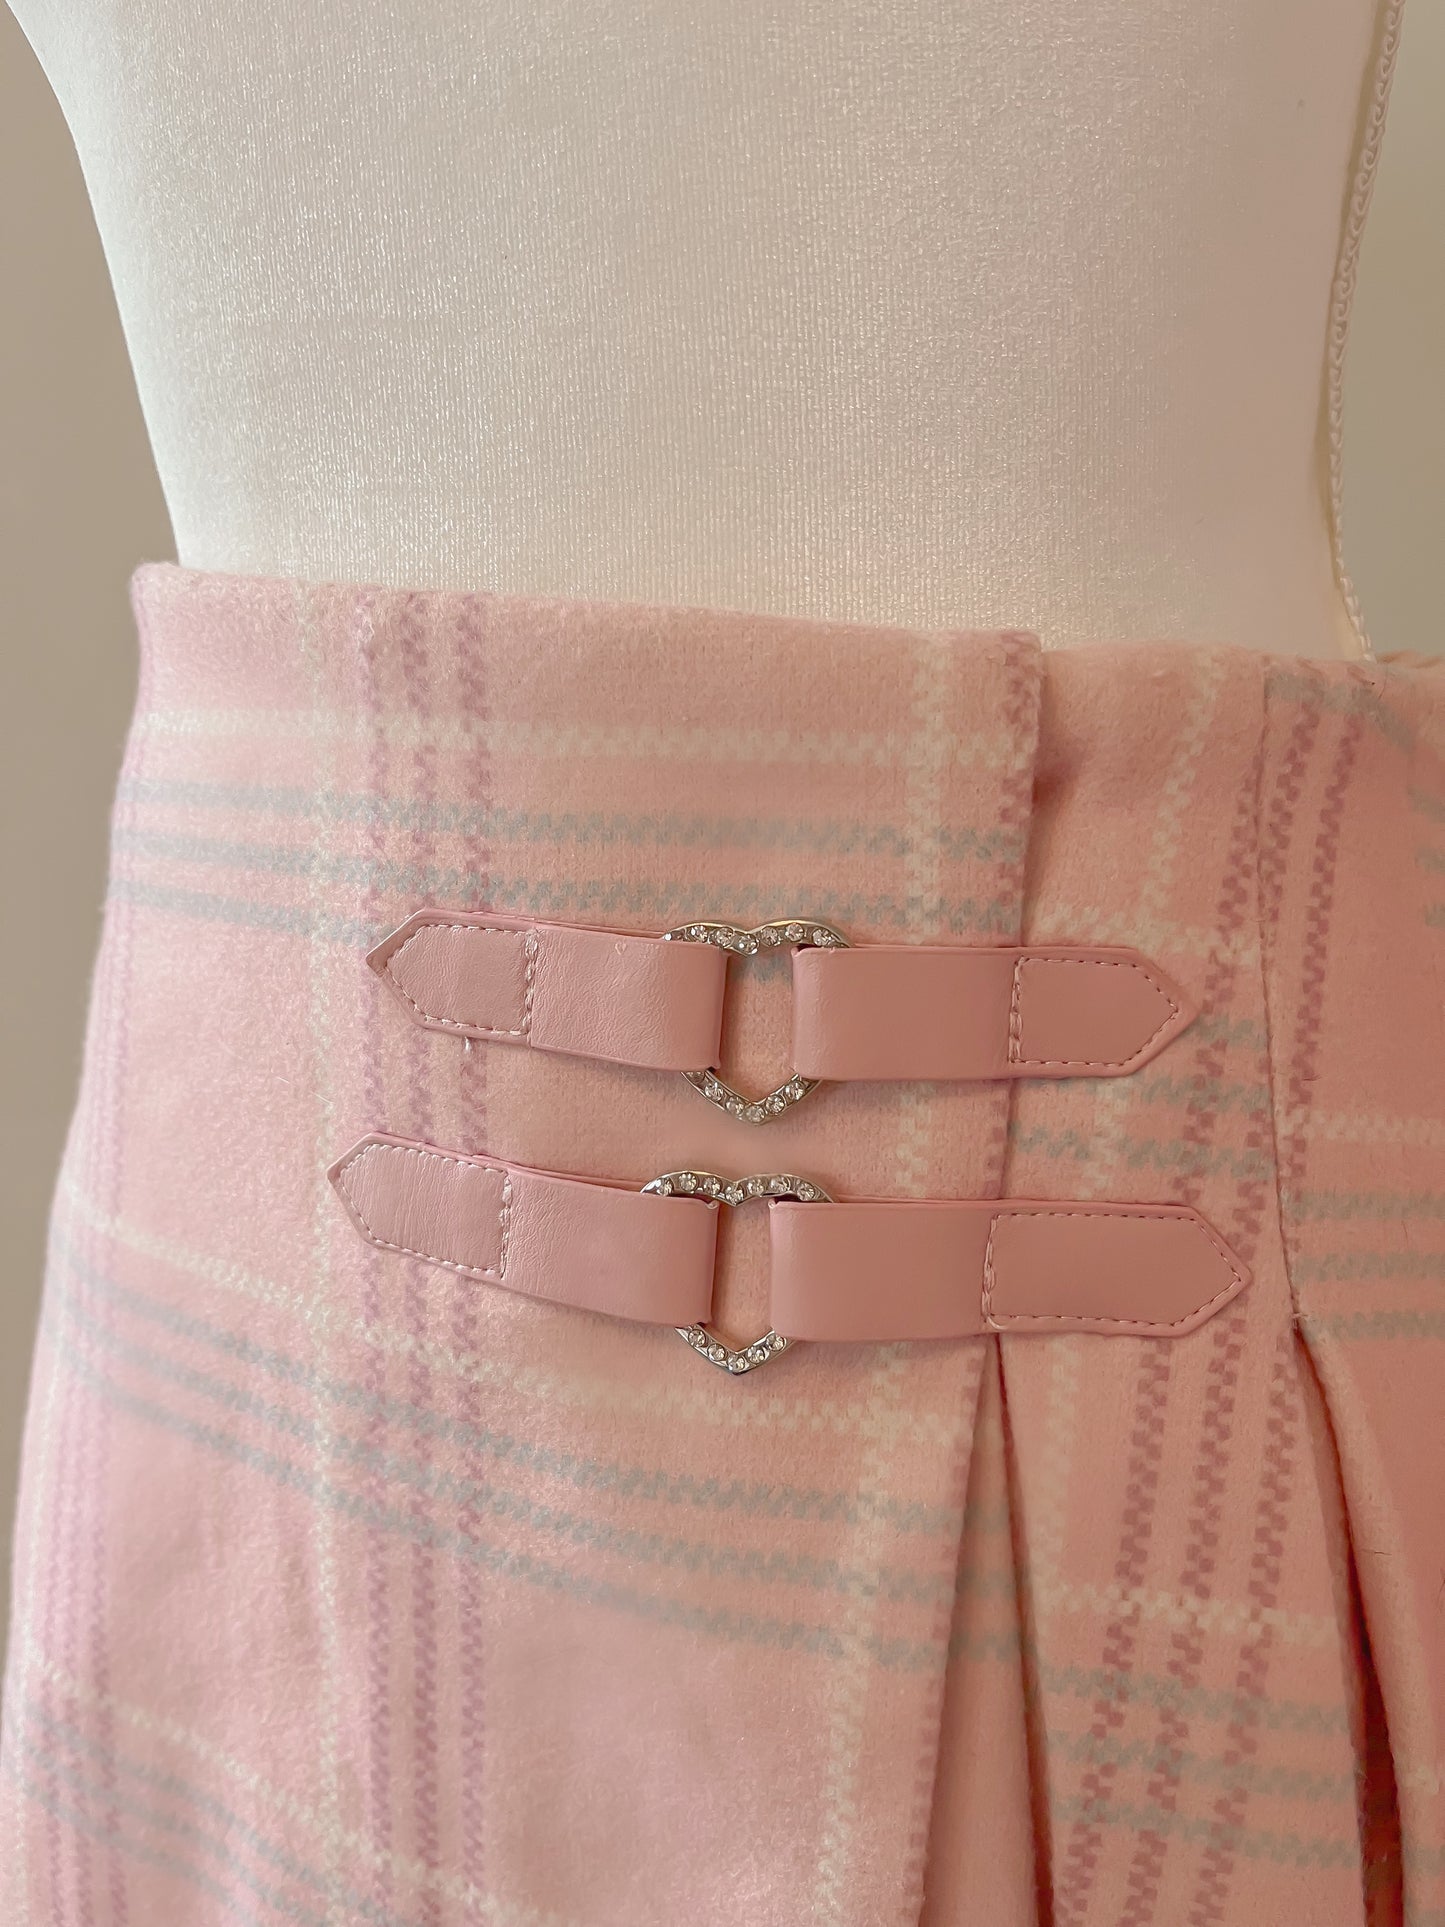 Pink Plaid Skirt Size Medium (USA 6-8)